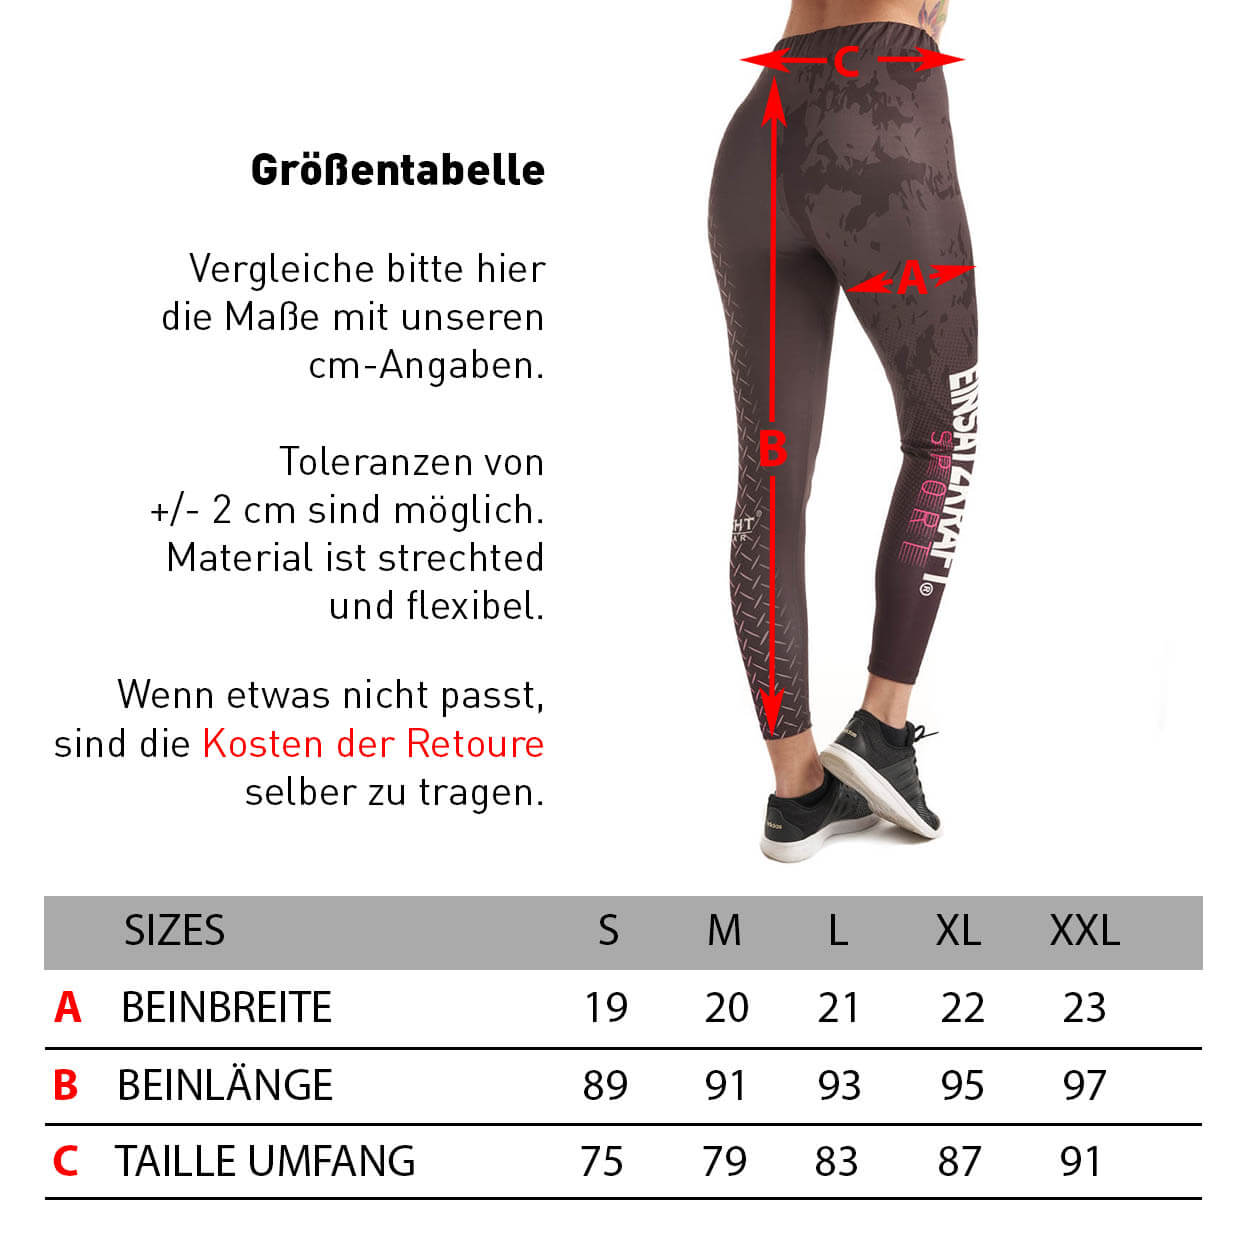 EINSATZKRAFT® Fitness Leggings Frauen